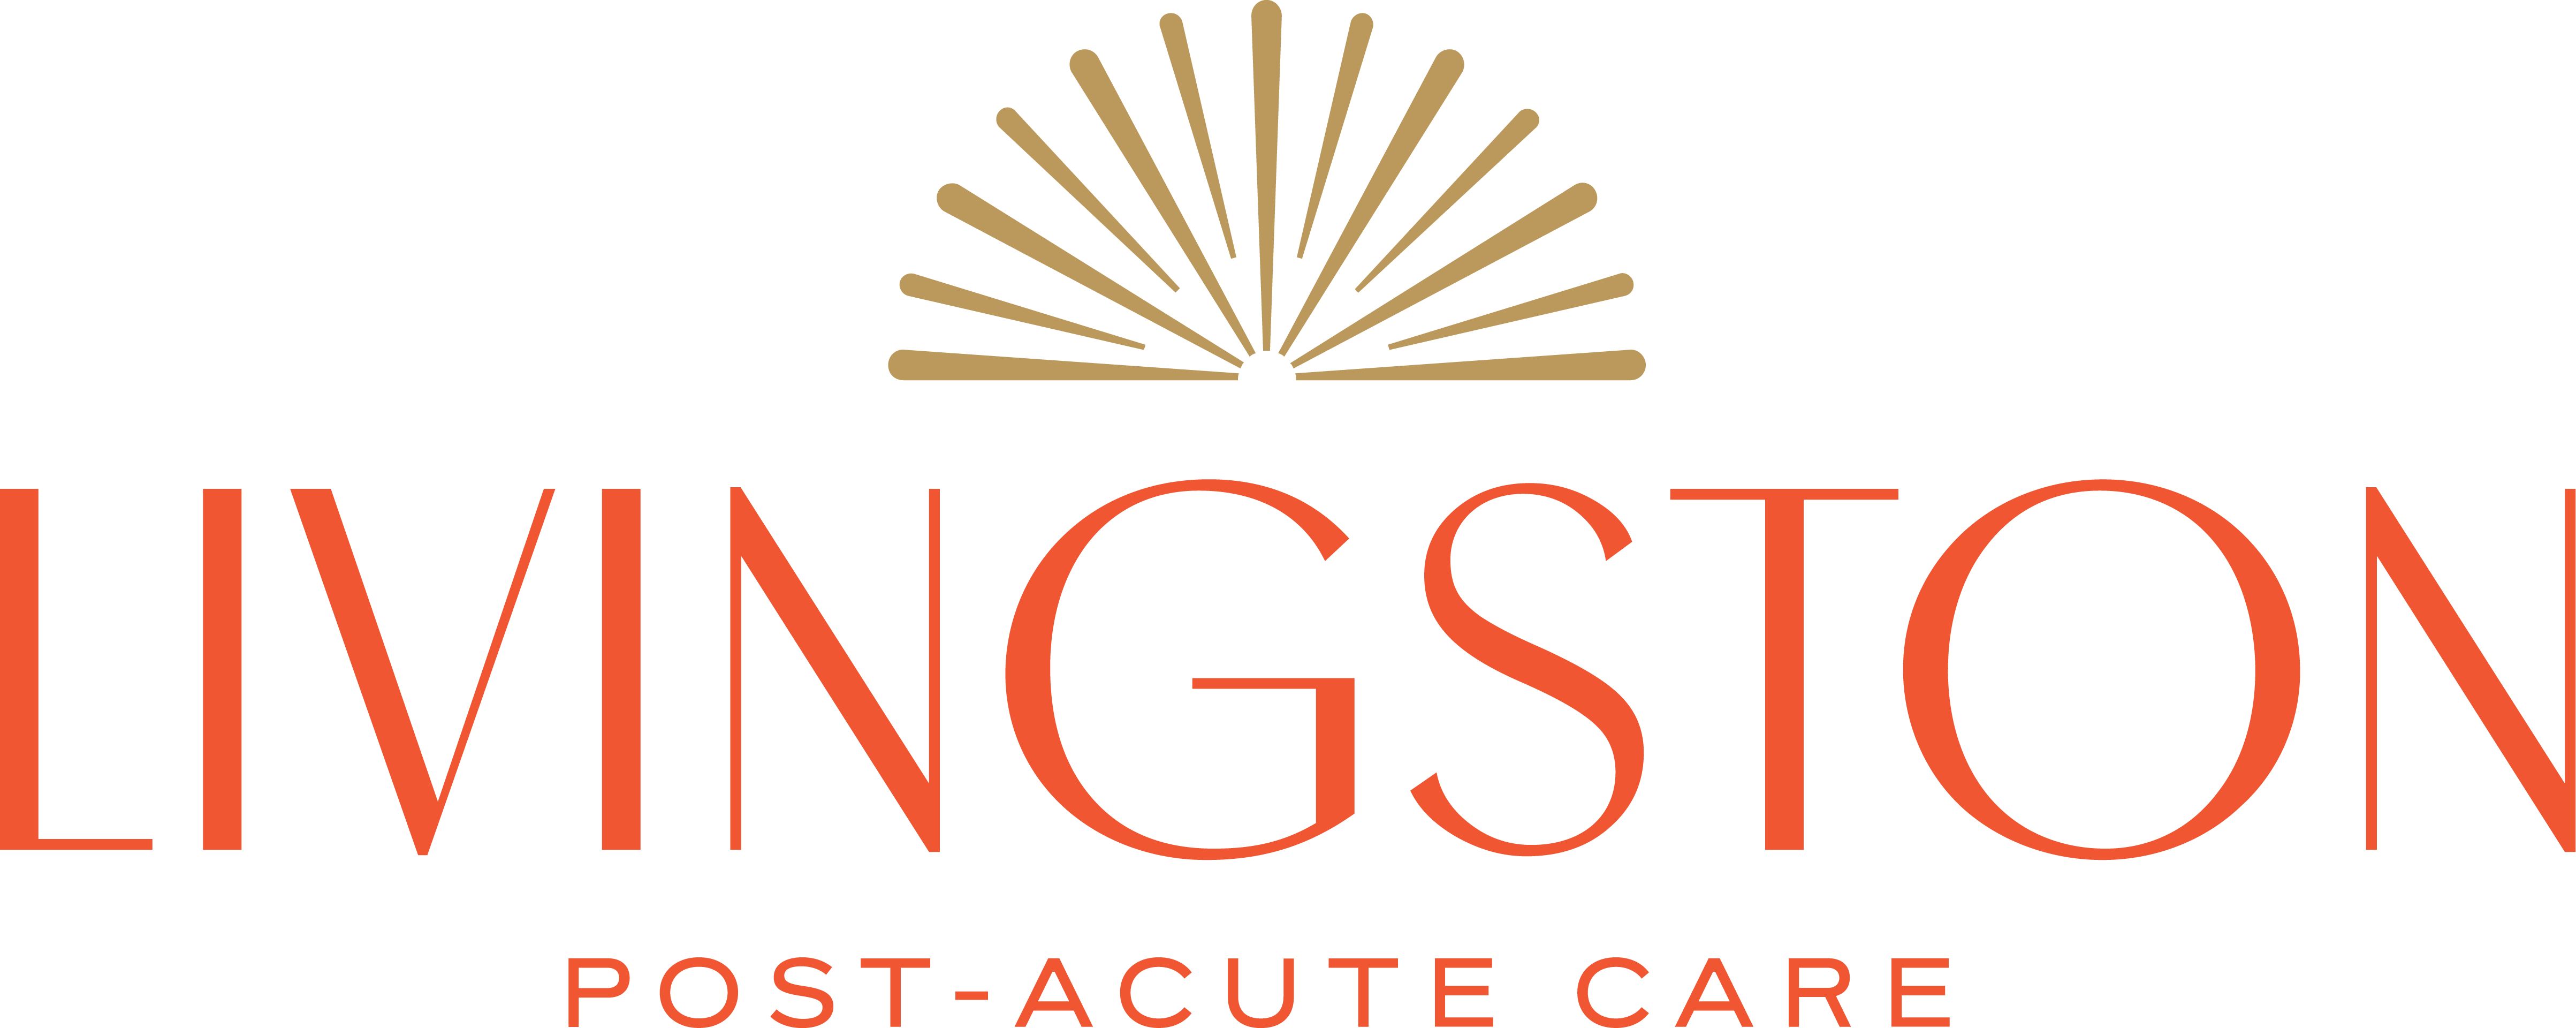 Livingston Post- Acute Care 